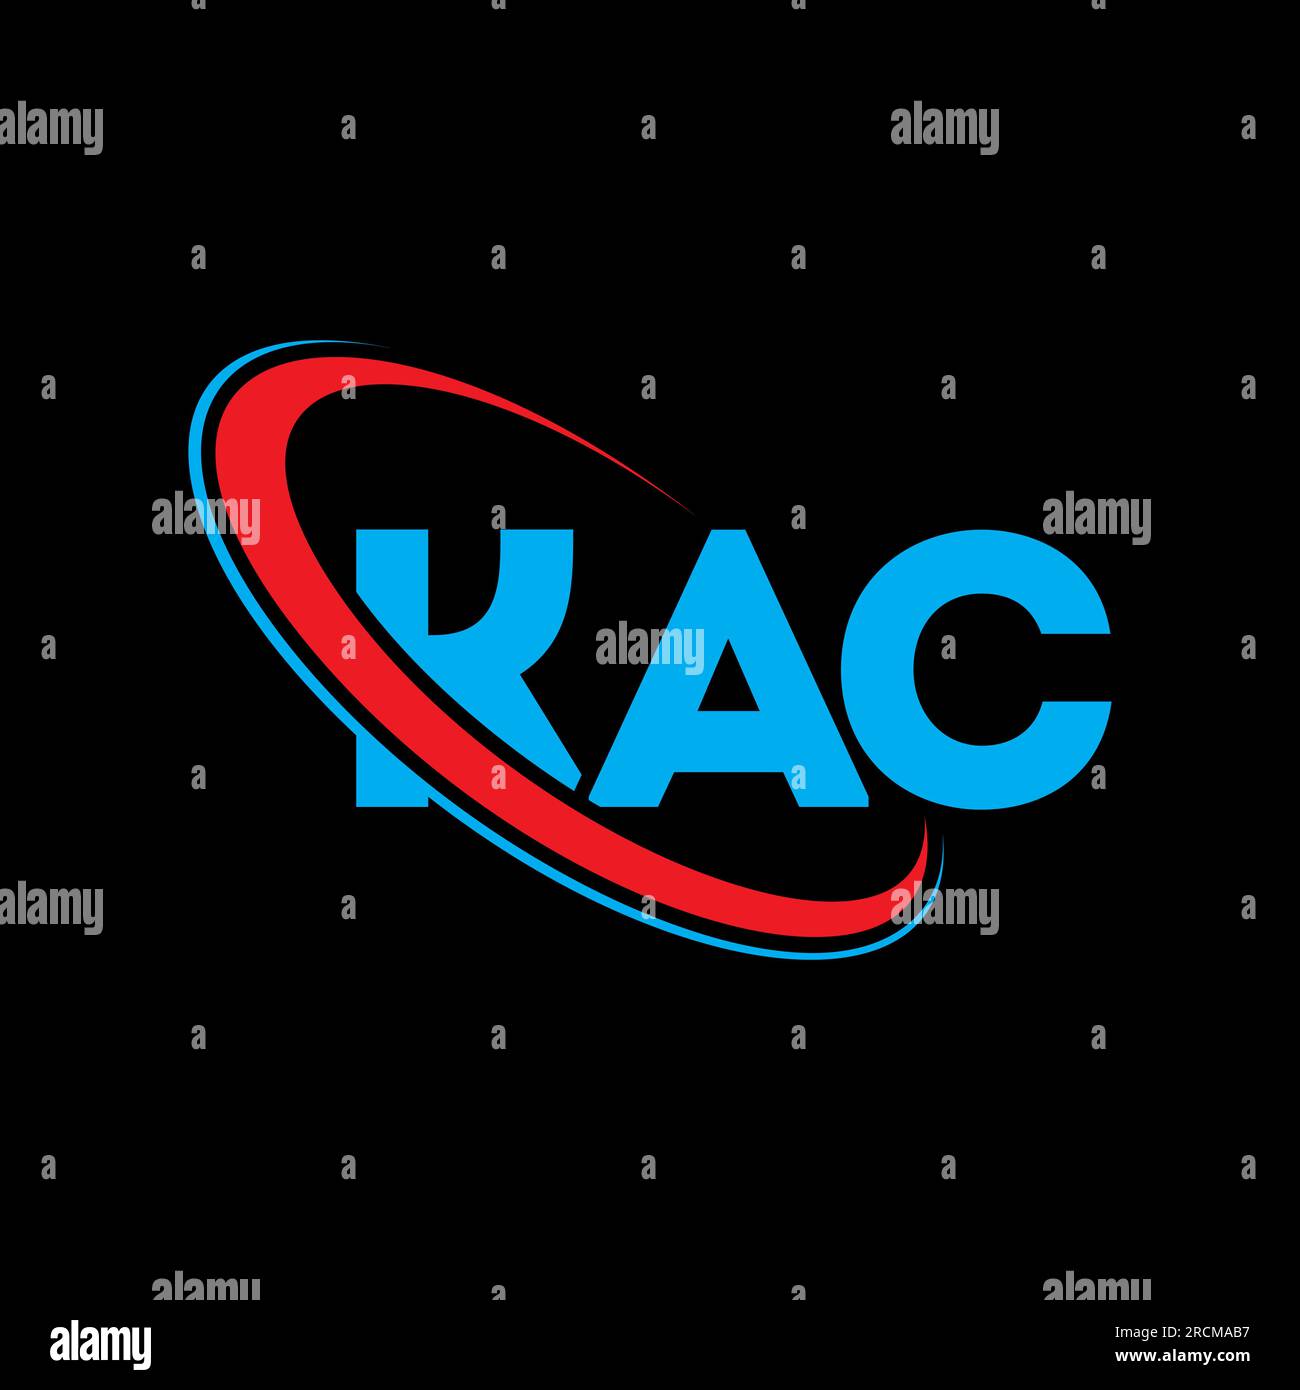 KAC logo. KAC letter. KAC letter logo design. Initials KAC logo linked with circle and uppercase monogram logo. KAC typography for technology, busines Stock Vector